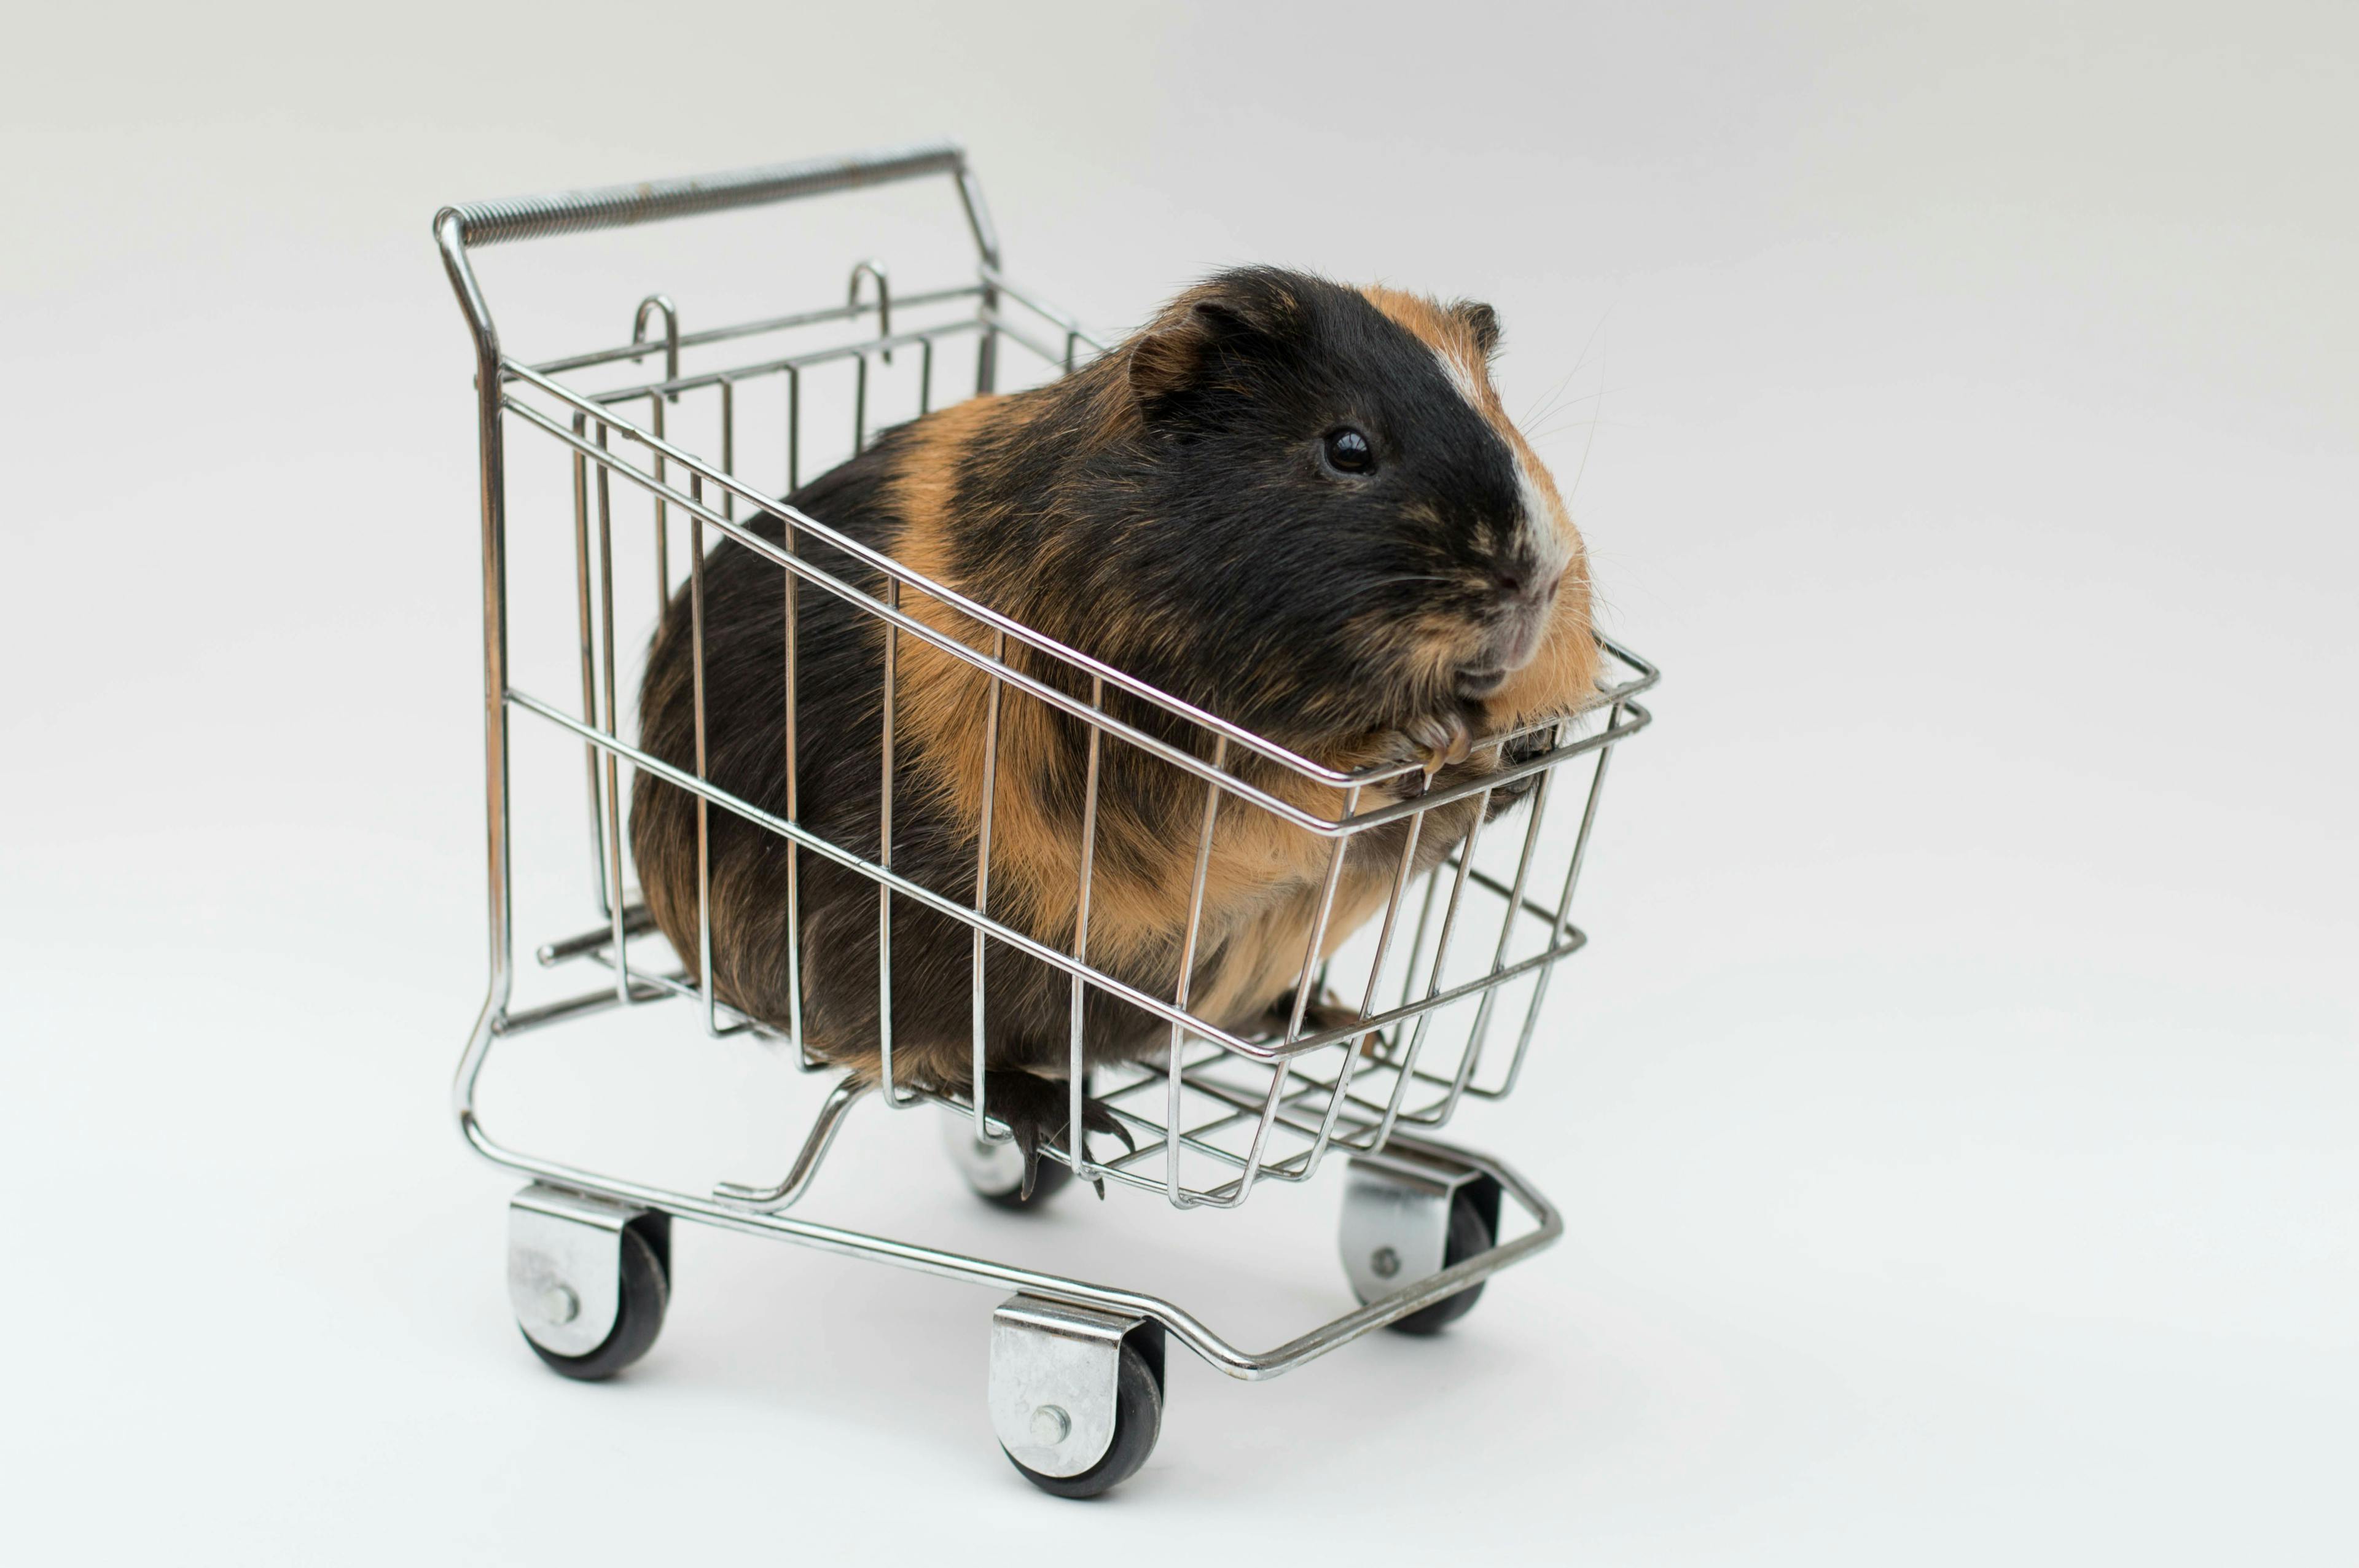 Guinea pig in a shopping cart